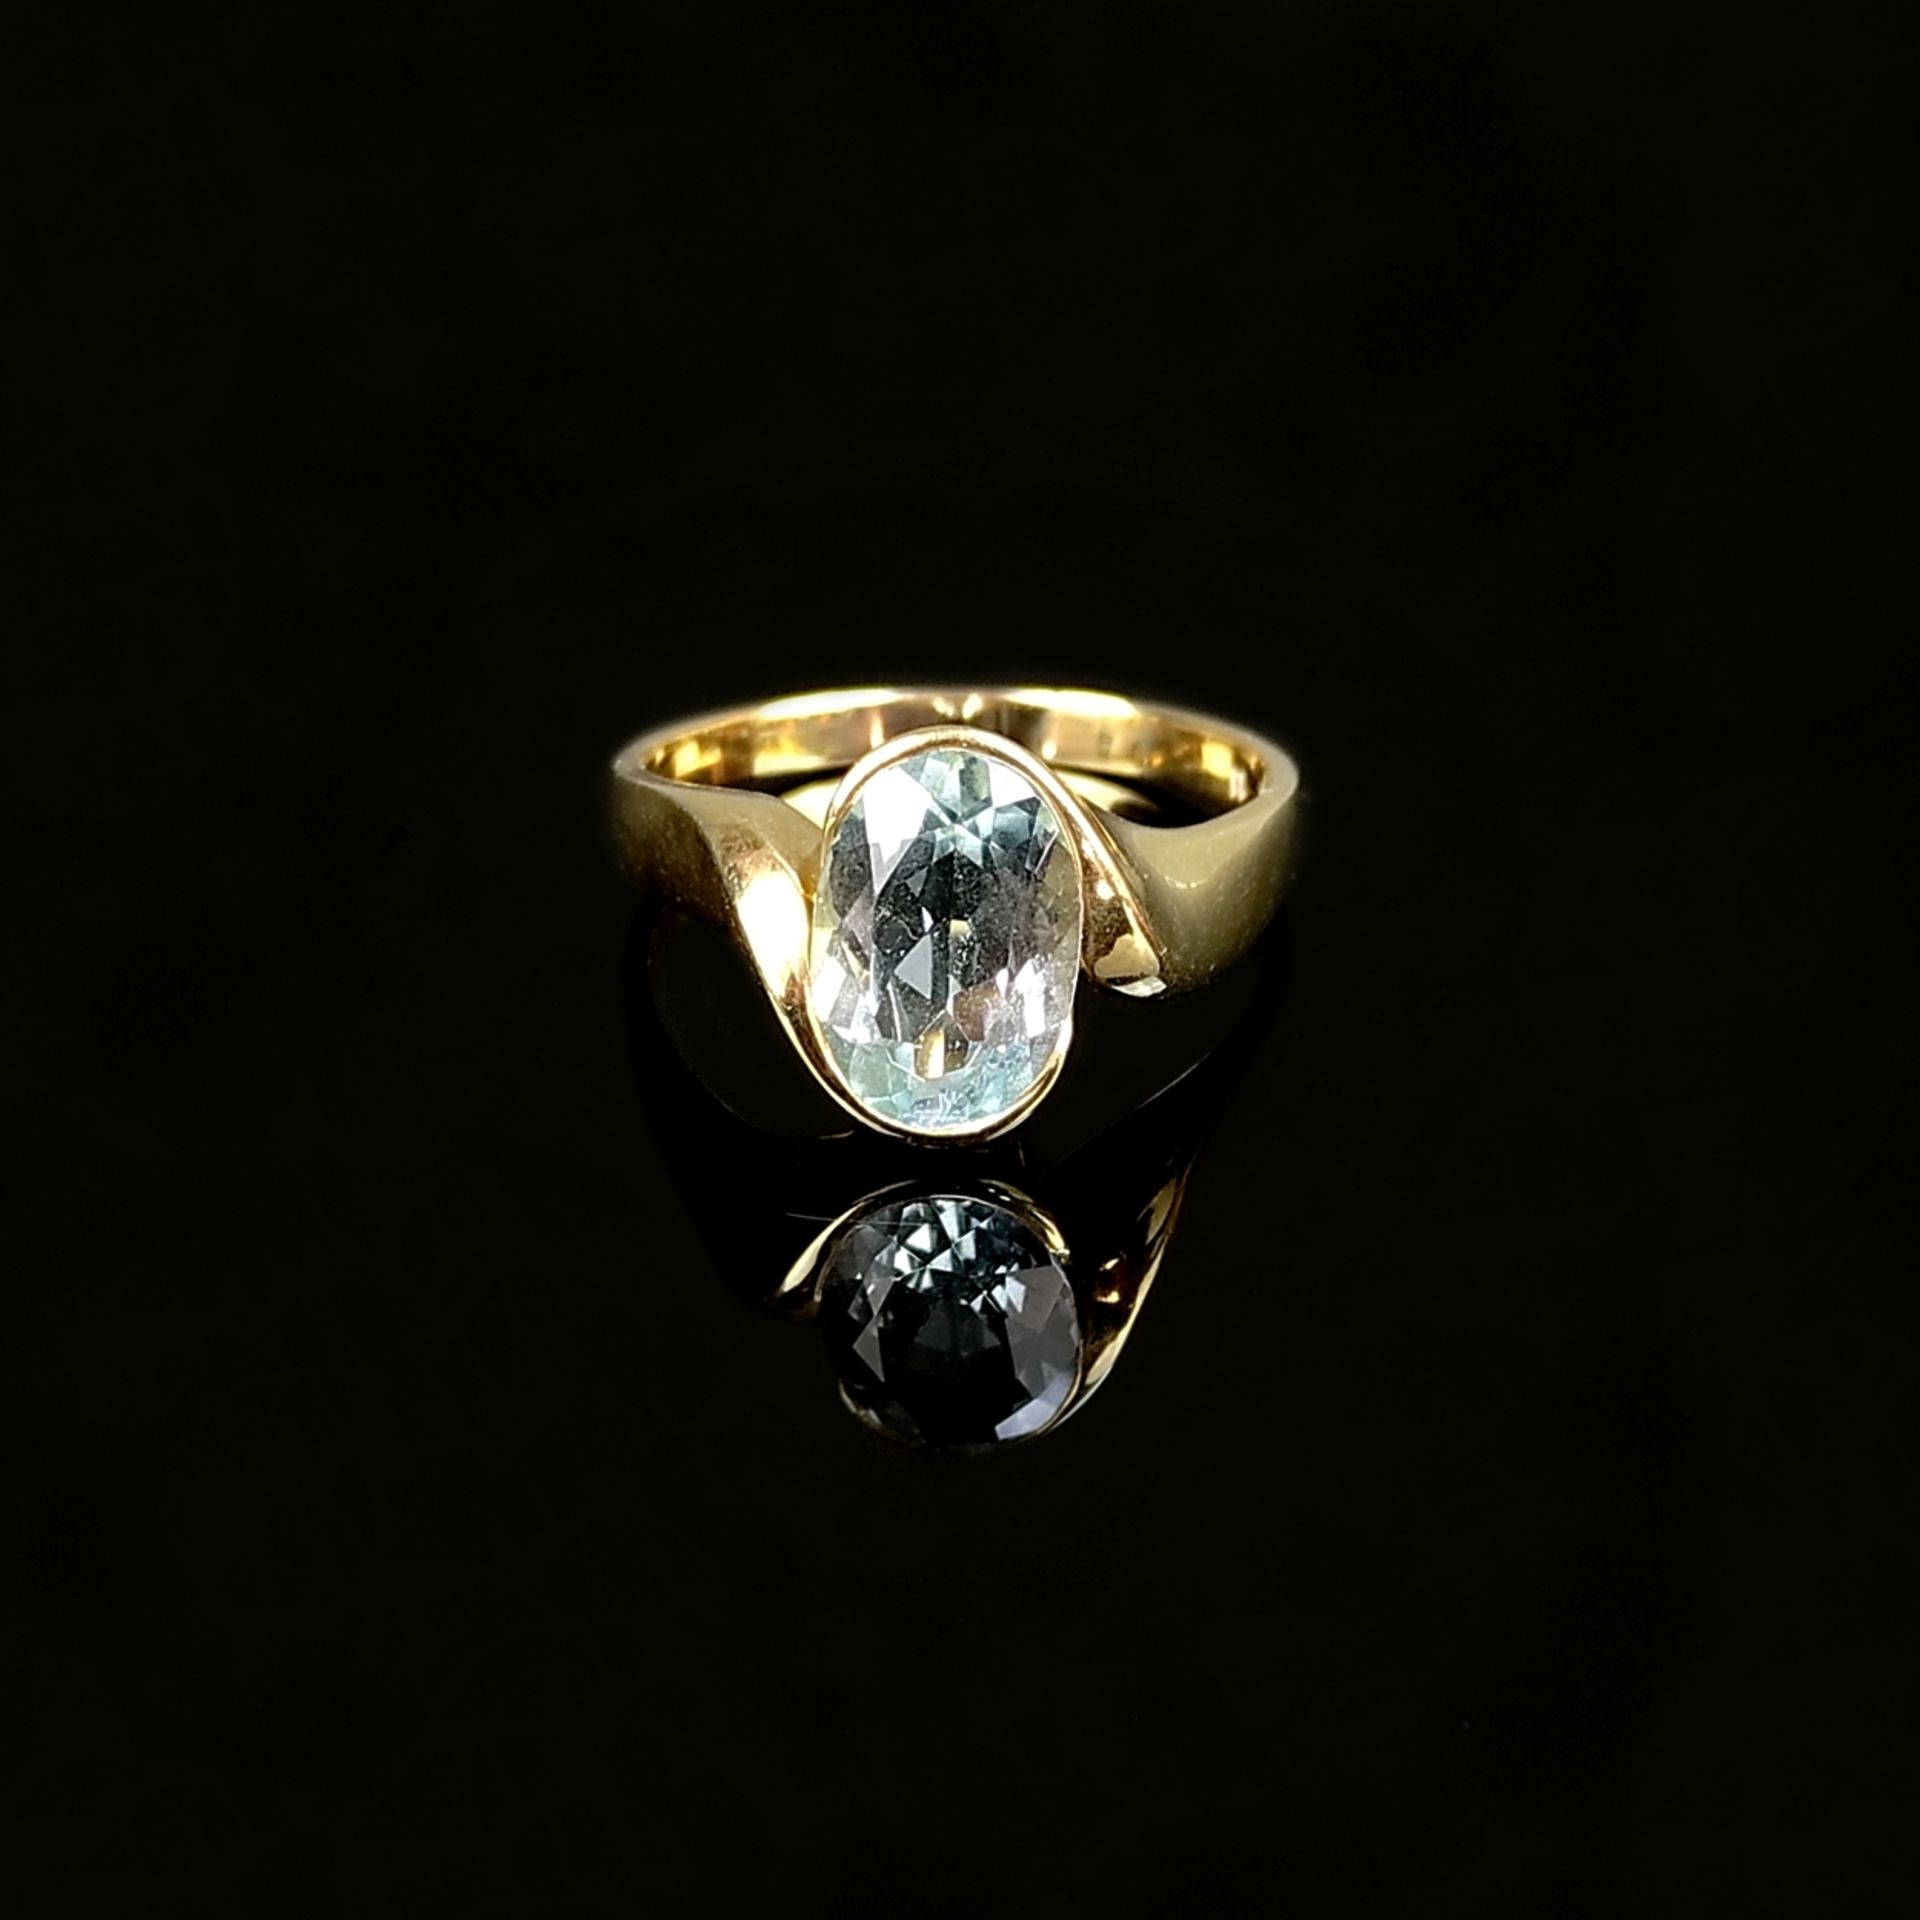 Aquamarin-Ring, 585/14K Gelbgold (punziert), 5,92g, mittig oval facettierter Aquamarin, Ringgröße 6 - Bild 2 aus 3